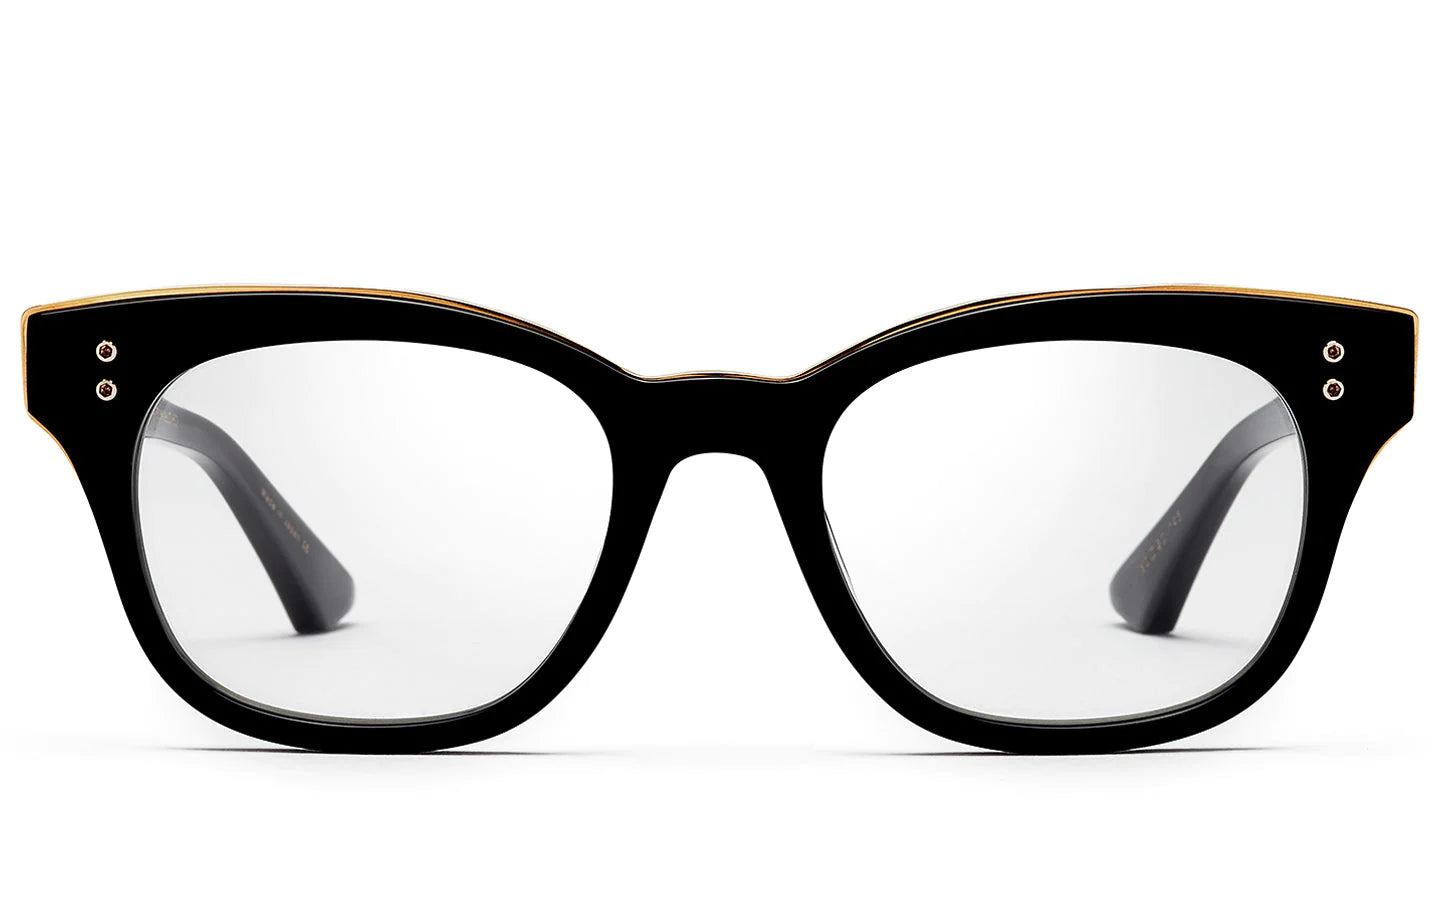 Buy DITA  Rhythm, a  Black, Gold; Acetate Optical Frame with a Oval shape. Adair Eyewear - 40+ Years History